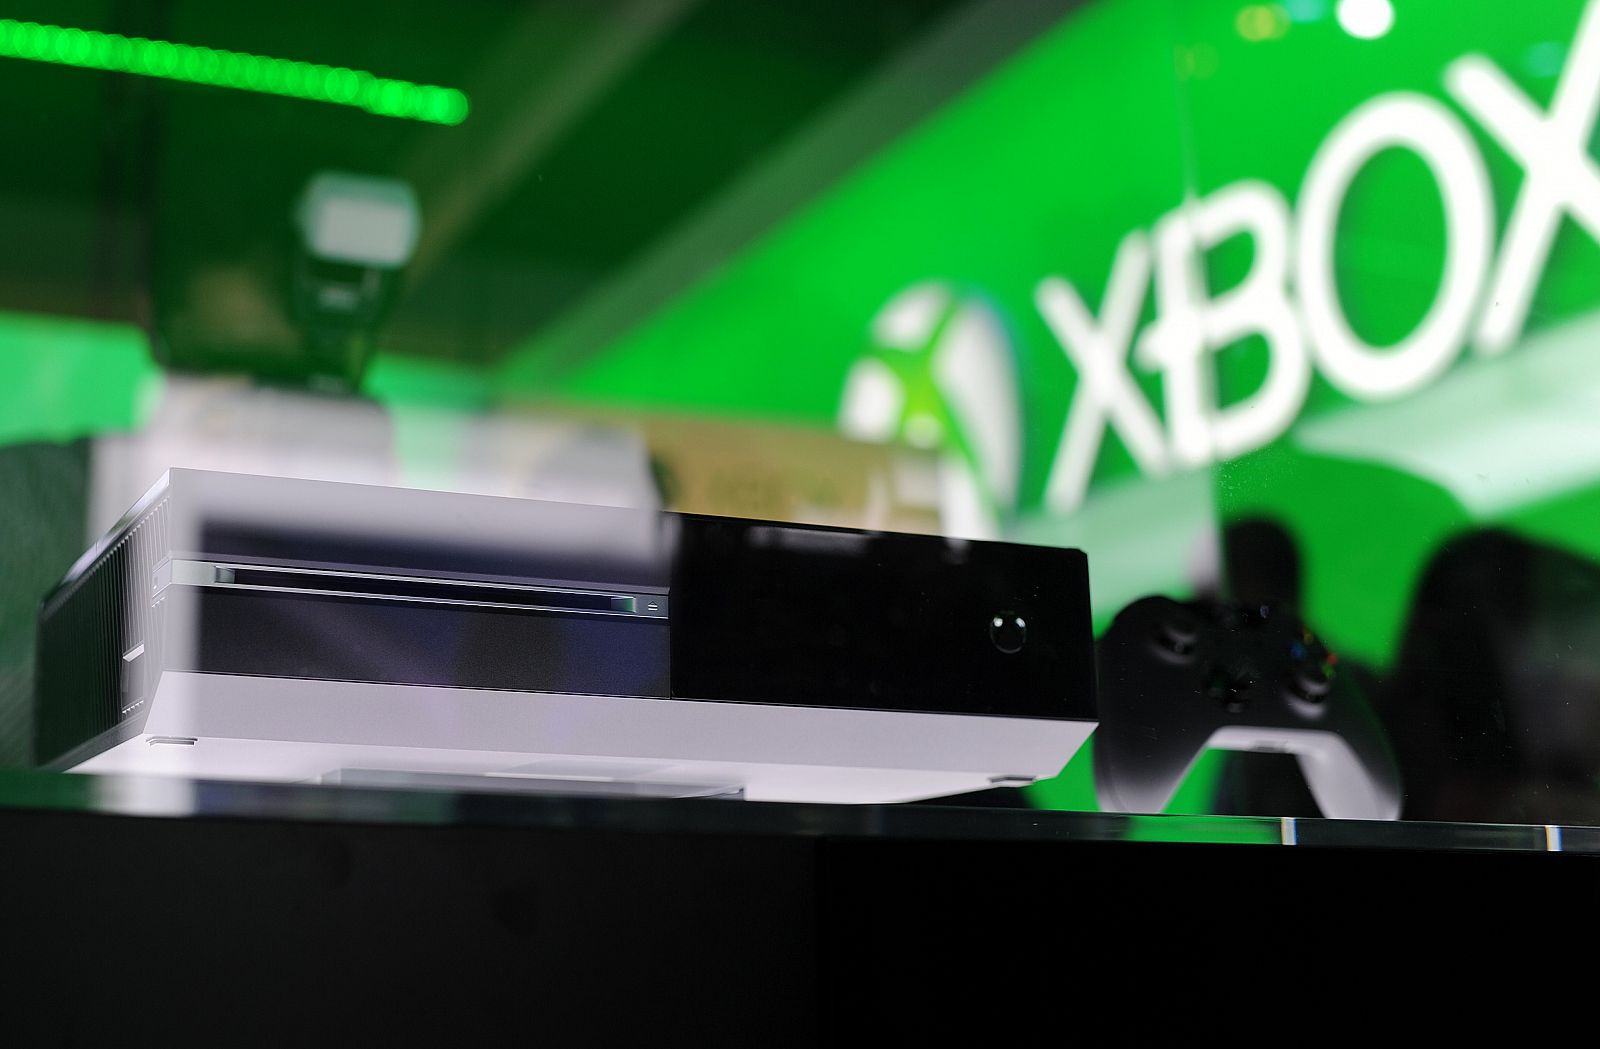 La nueva consola de Microsoft, Xbox One